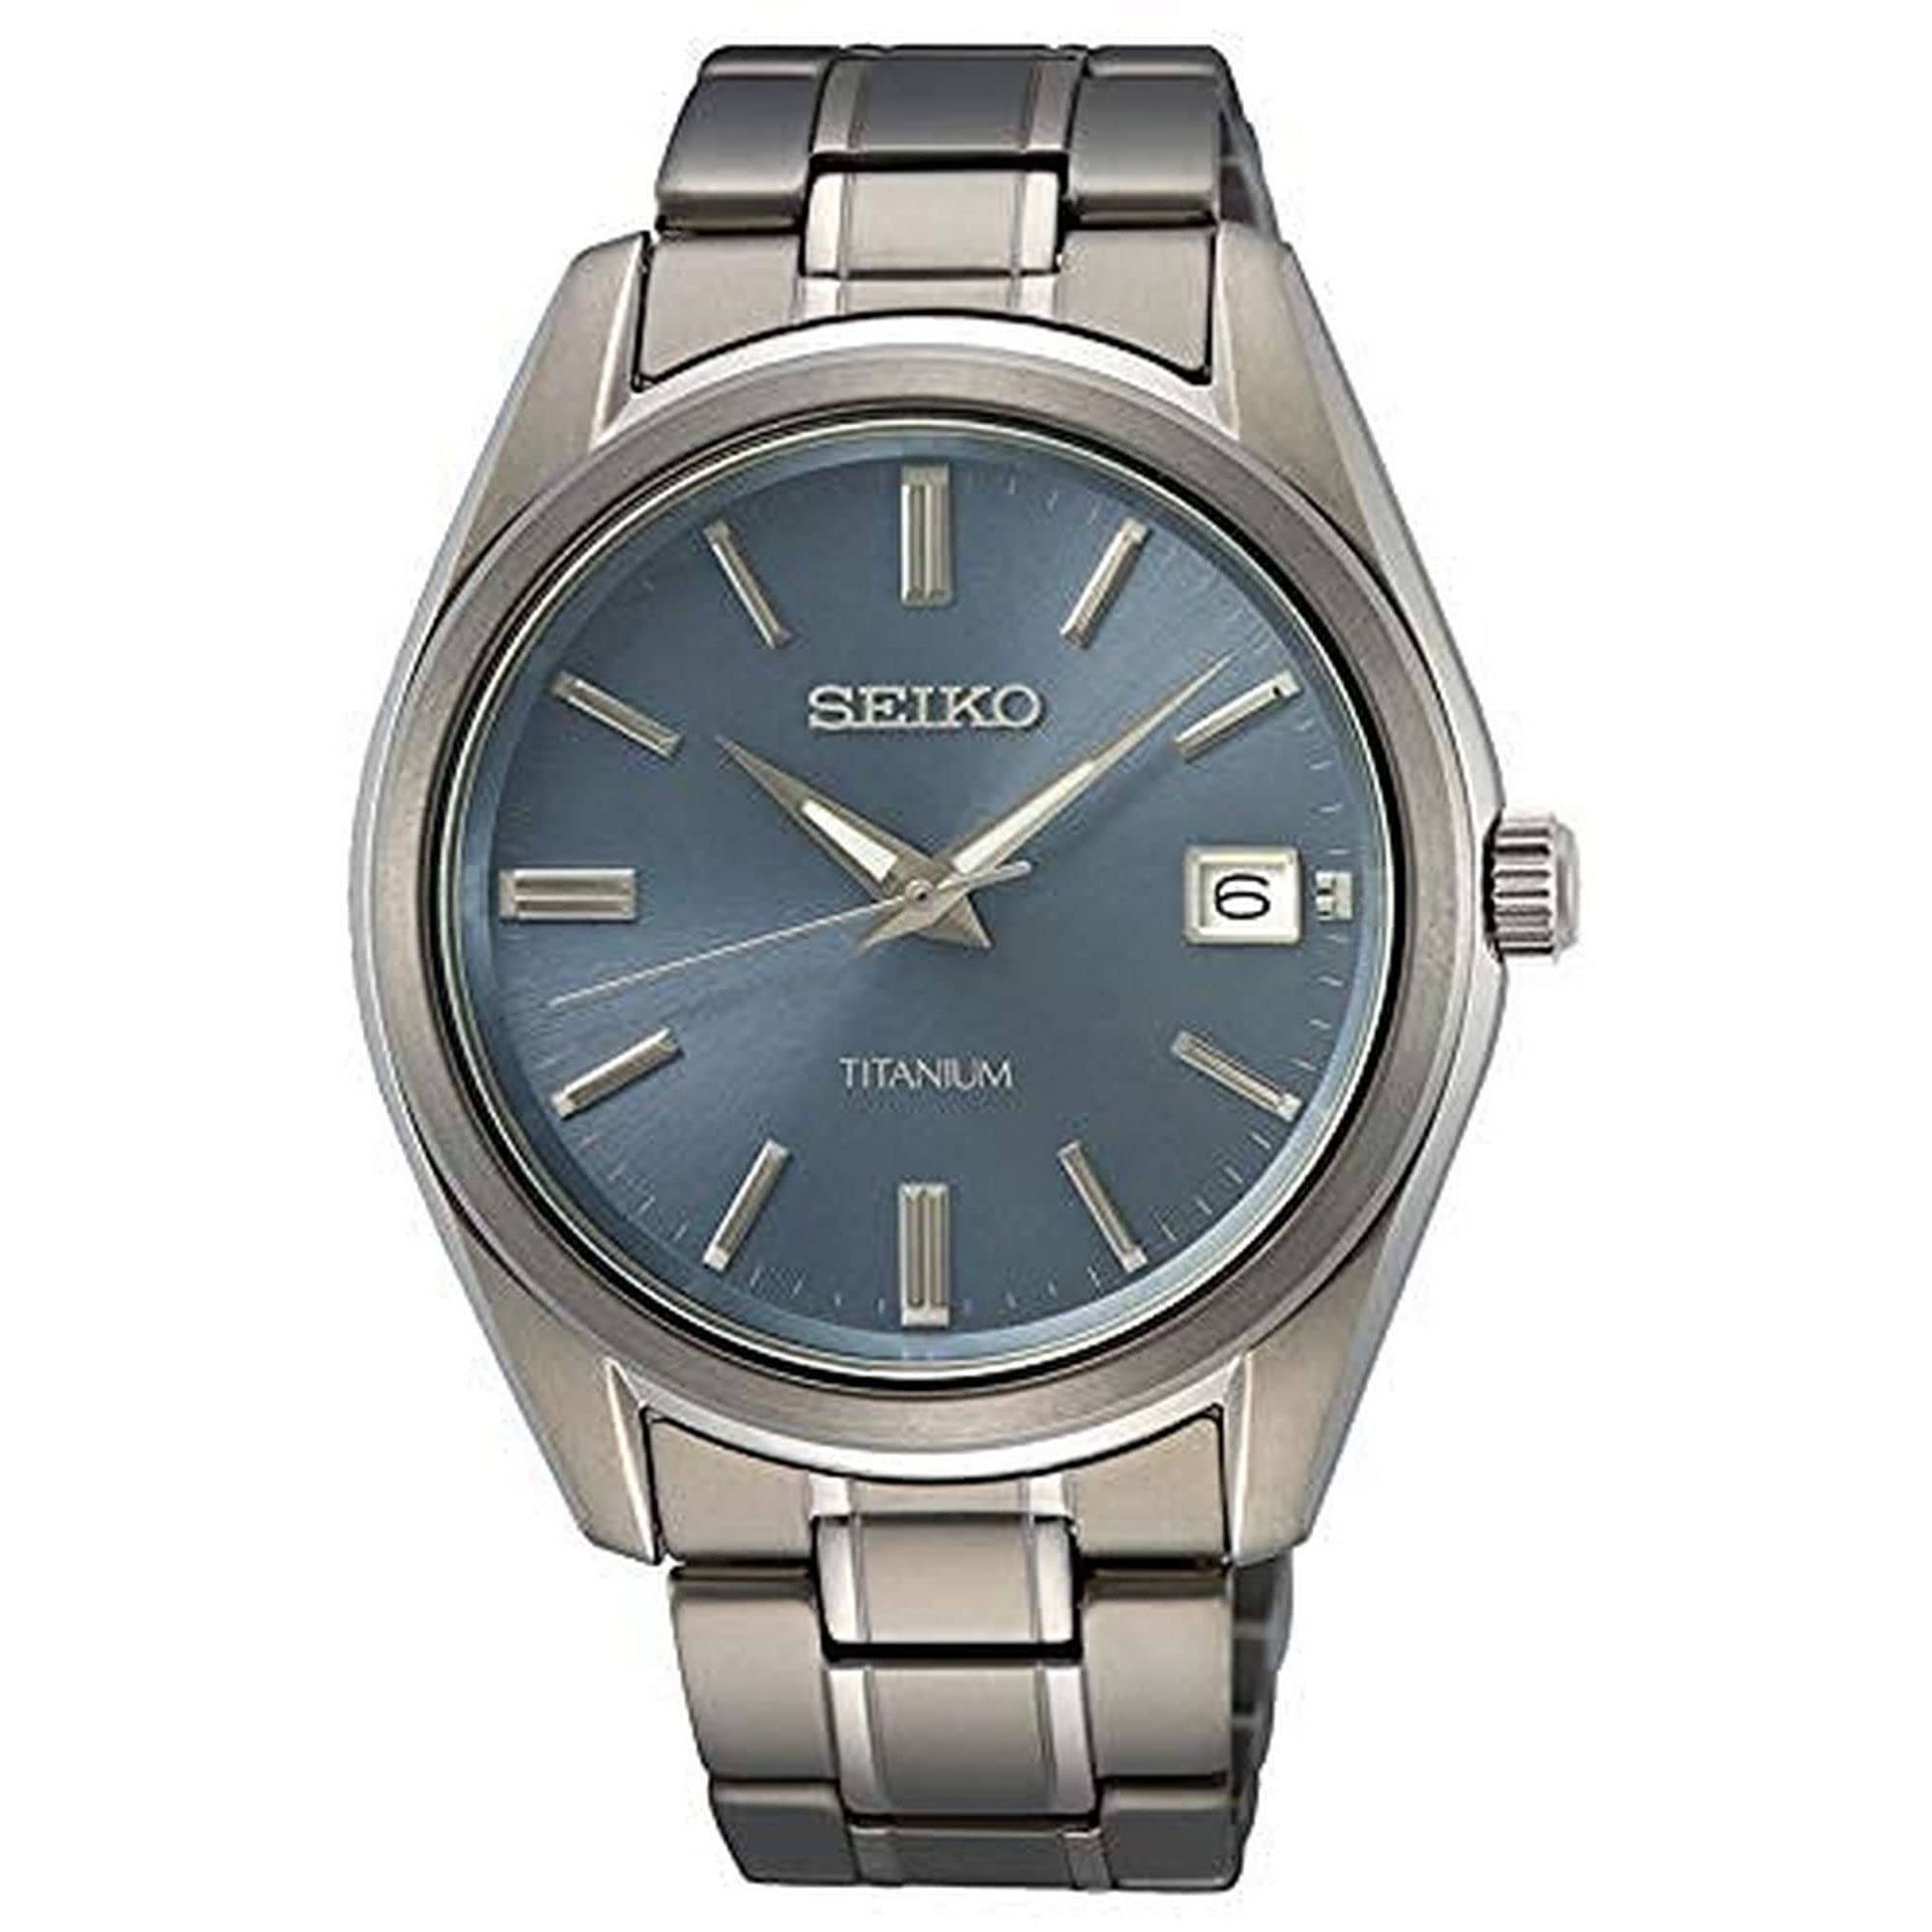 Seiko Men's Analog Quartz Watch with Stainless Steel Strap SUR371P1